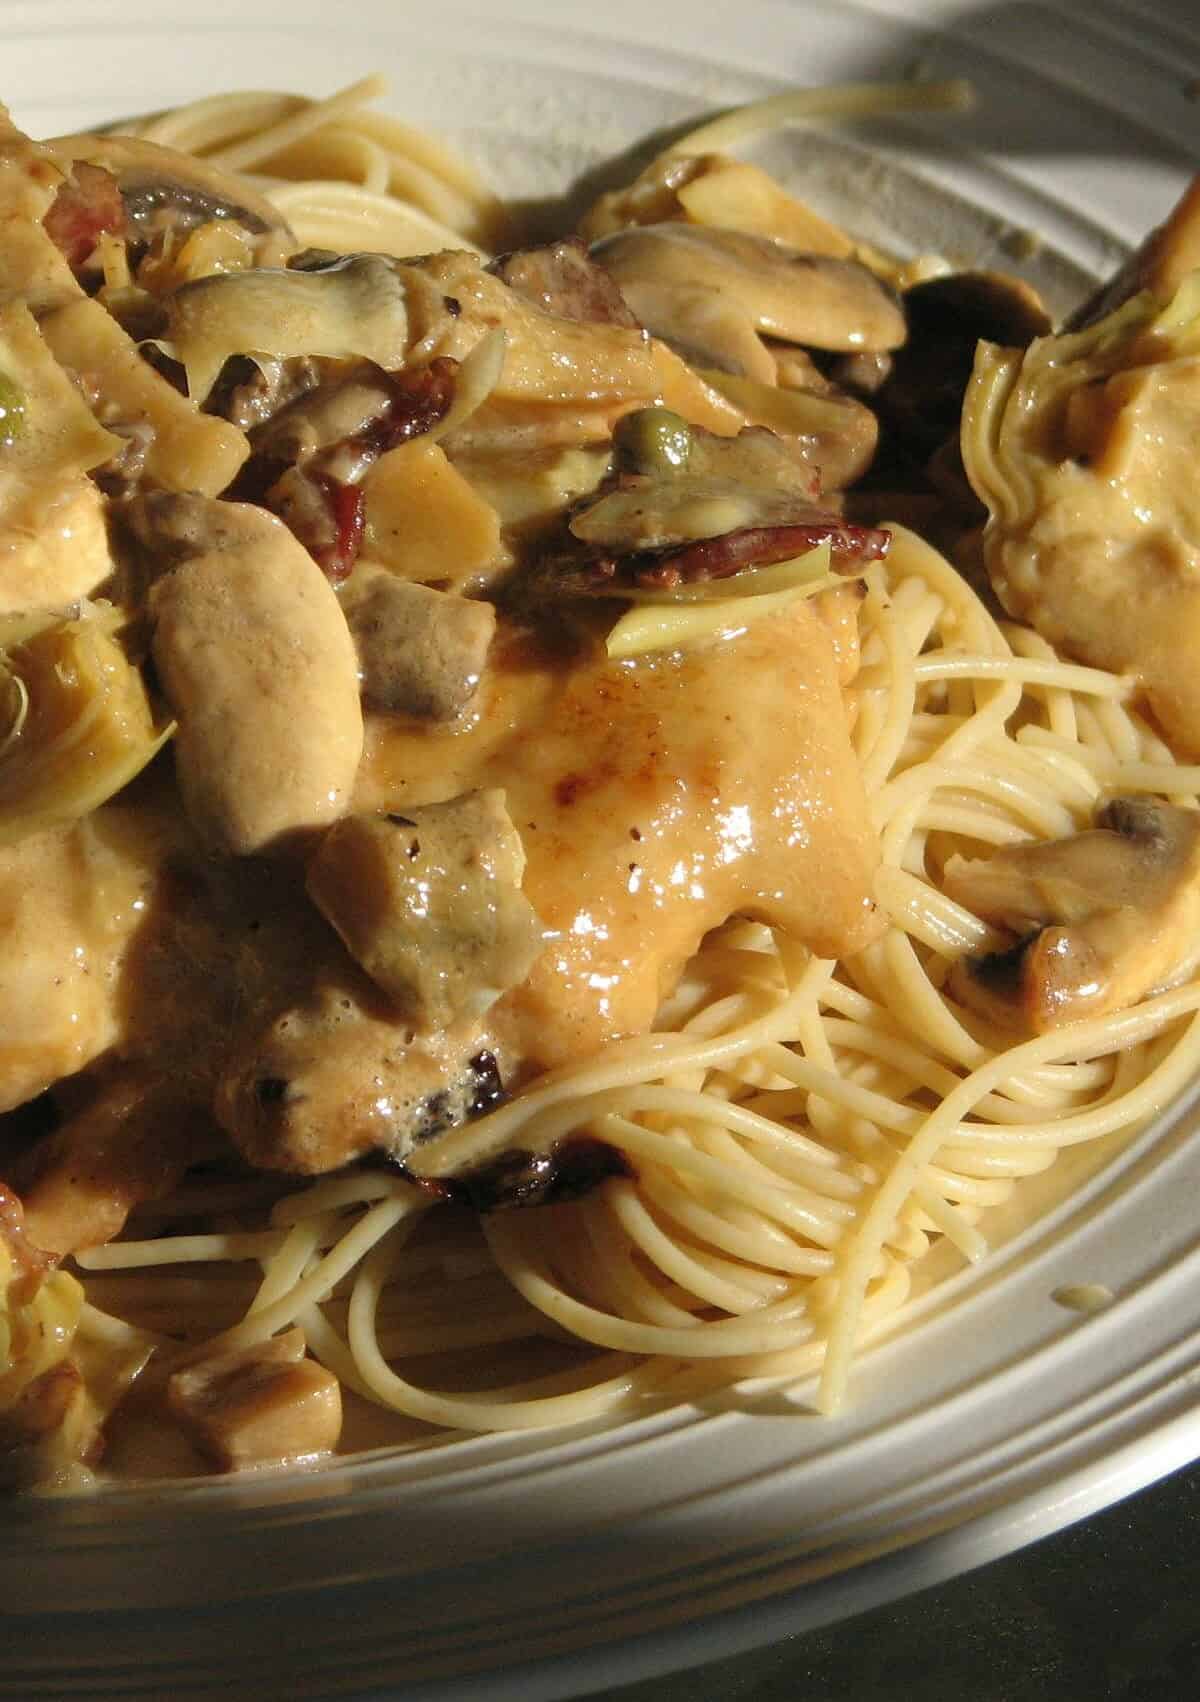  Chicken Scaloppine, a staple of Italian cuisine